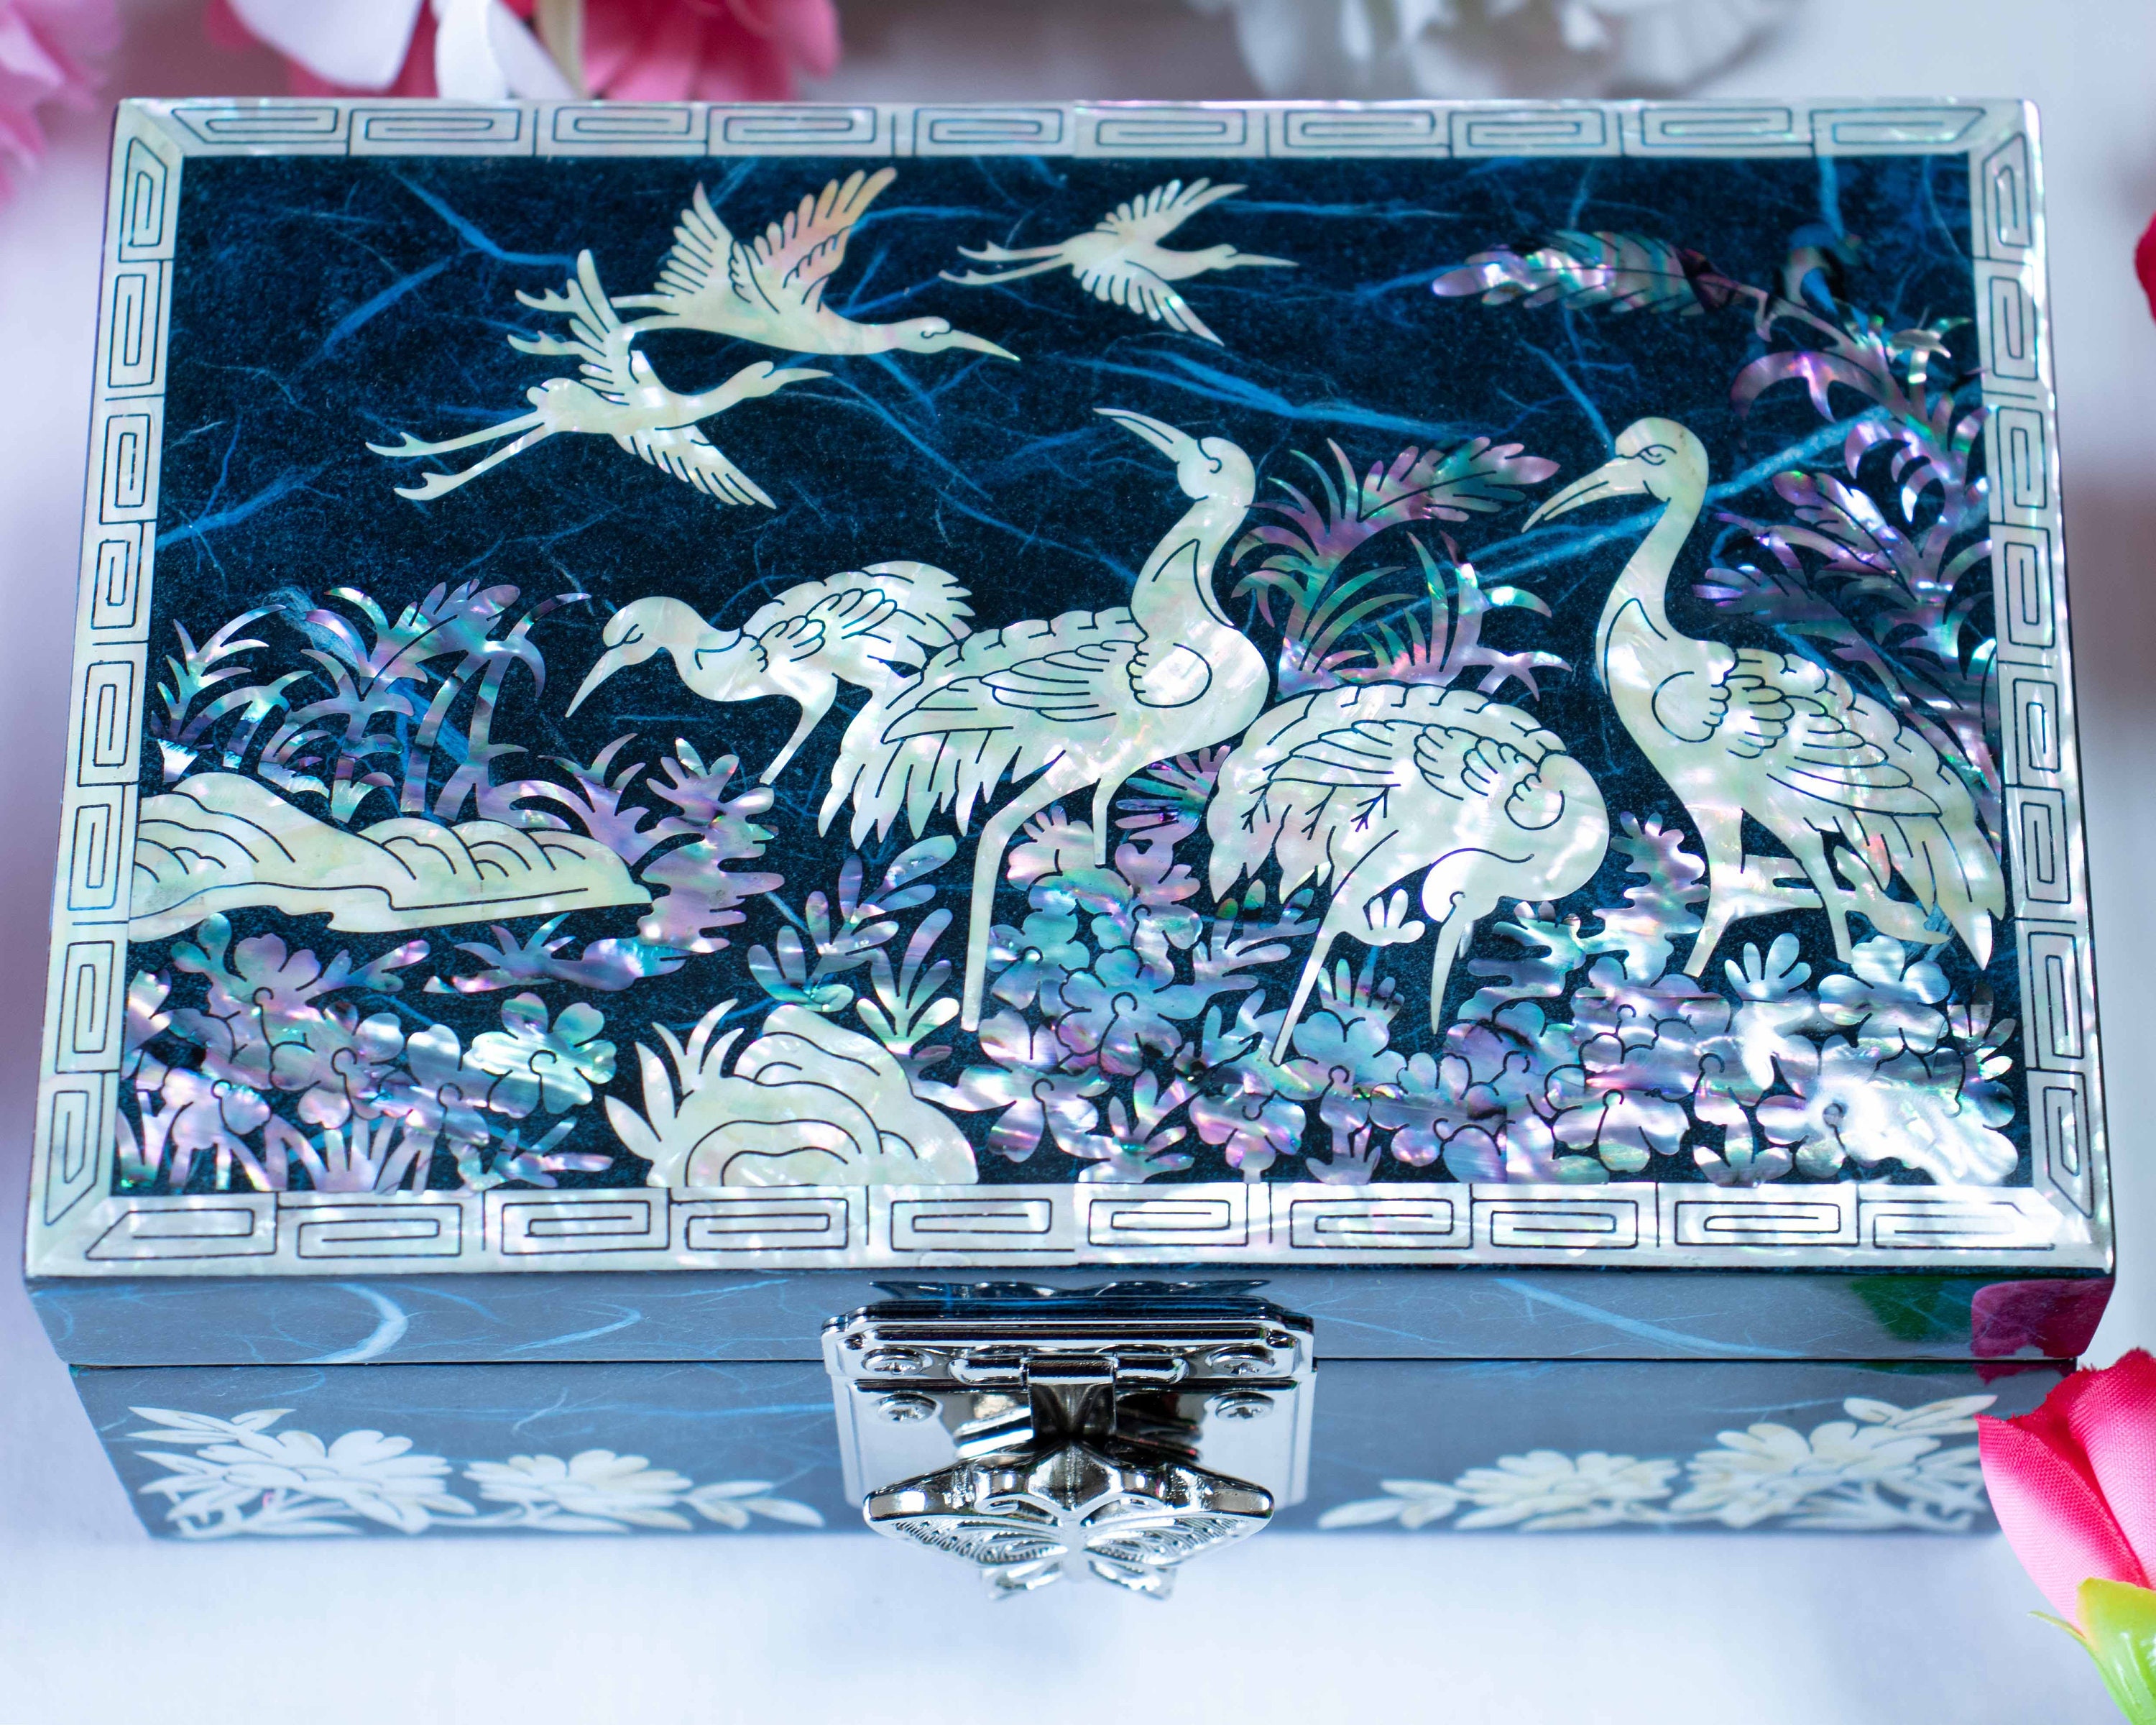 Mosaic Sea Glass Bento Box, Beach Glass Abalone Japanese Lunch Box for  Adults, Barcelona Gaudi Asian Unique Aqua Boho Eclectic Aesthetic 